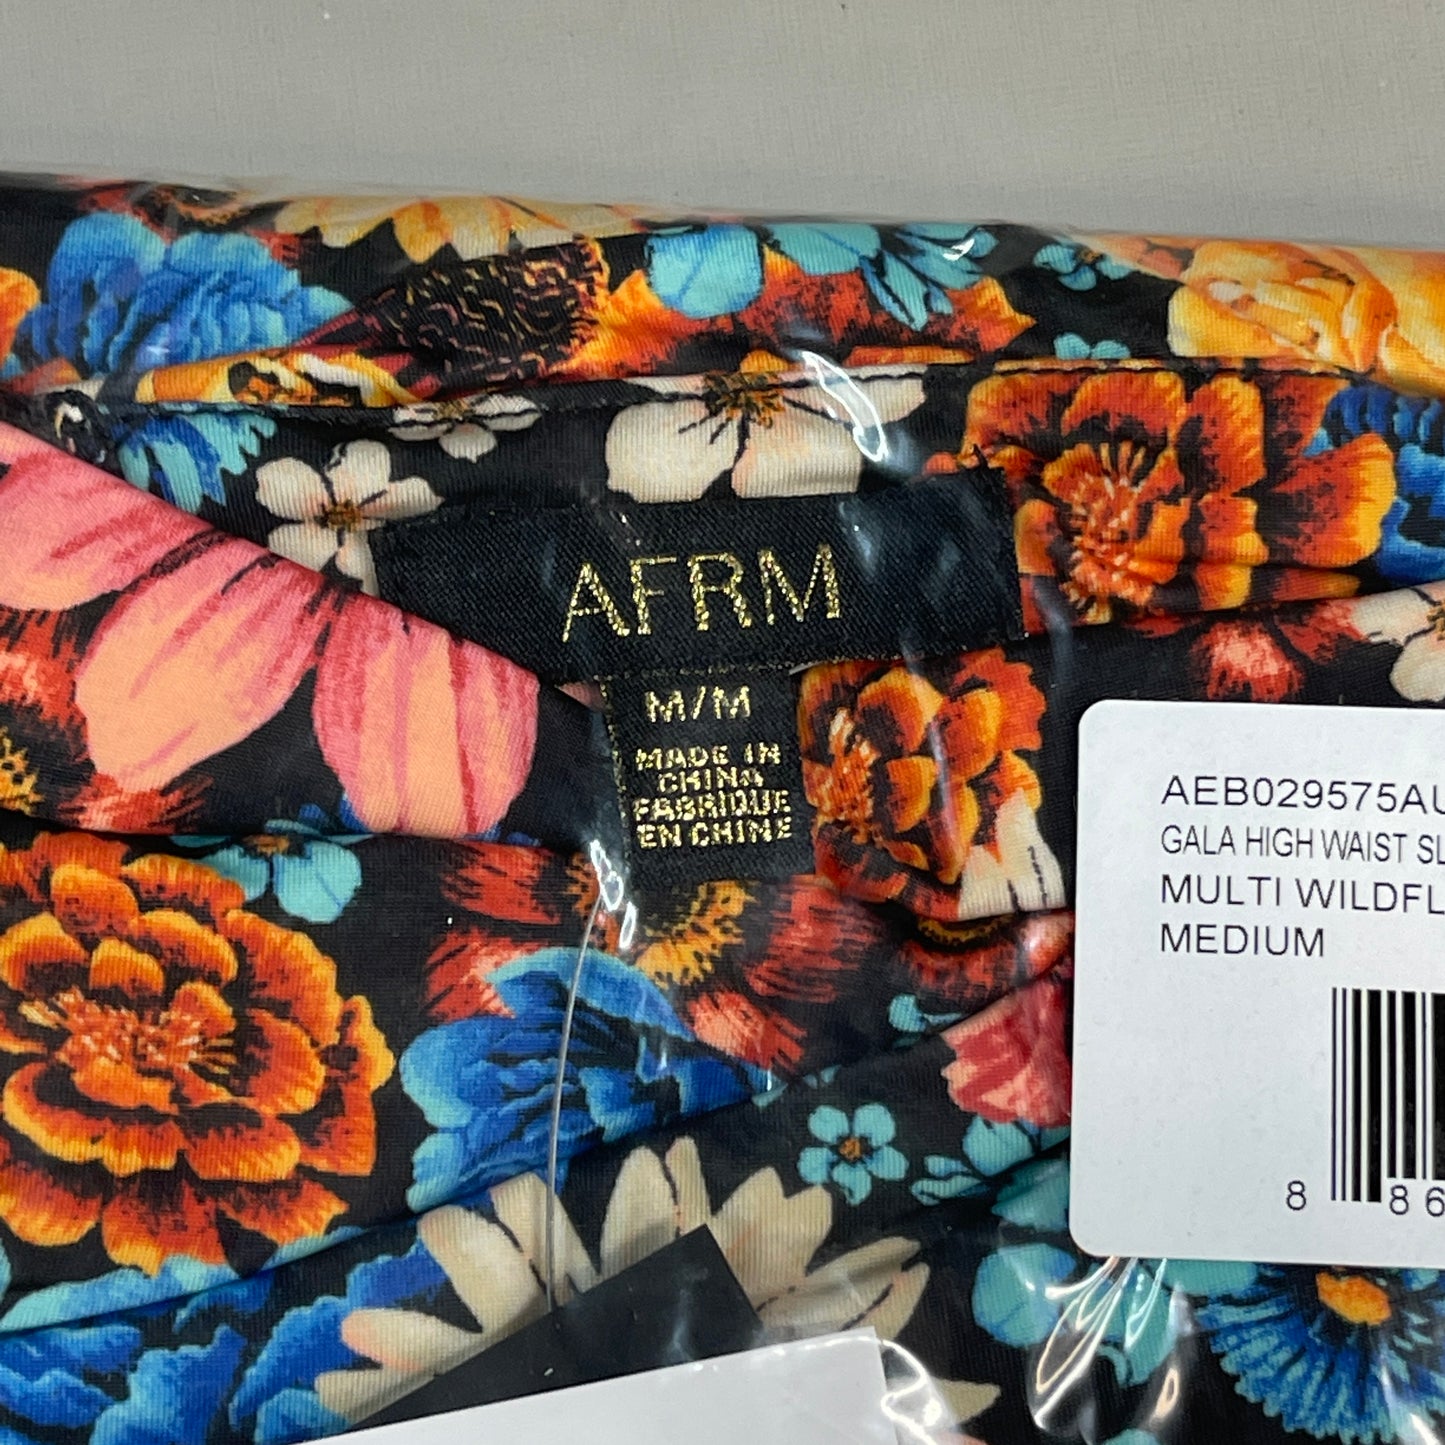 AFRM X Revolve Gala Skirt Women's M Multi Wildflower Bouquet AEB029575AU18 (New)